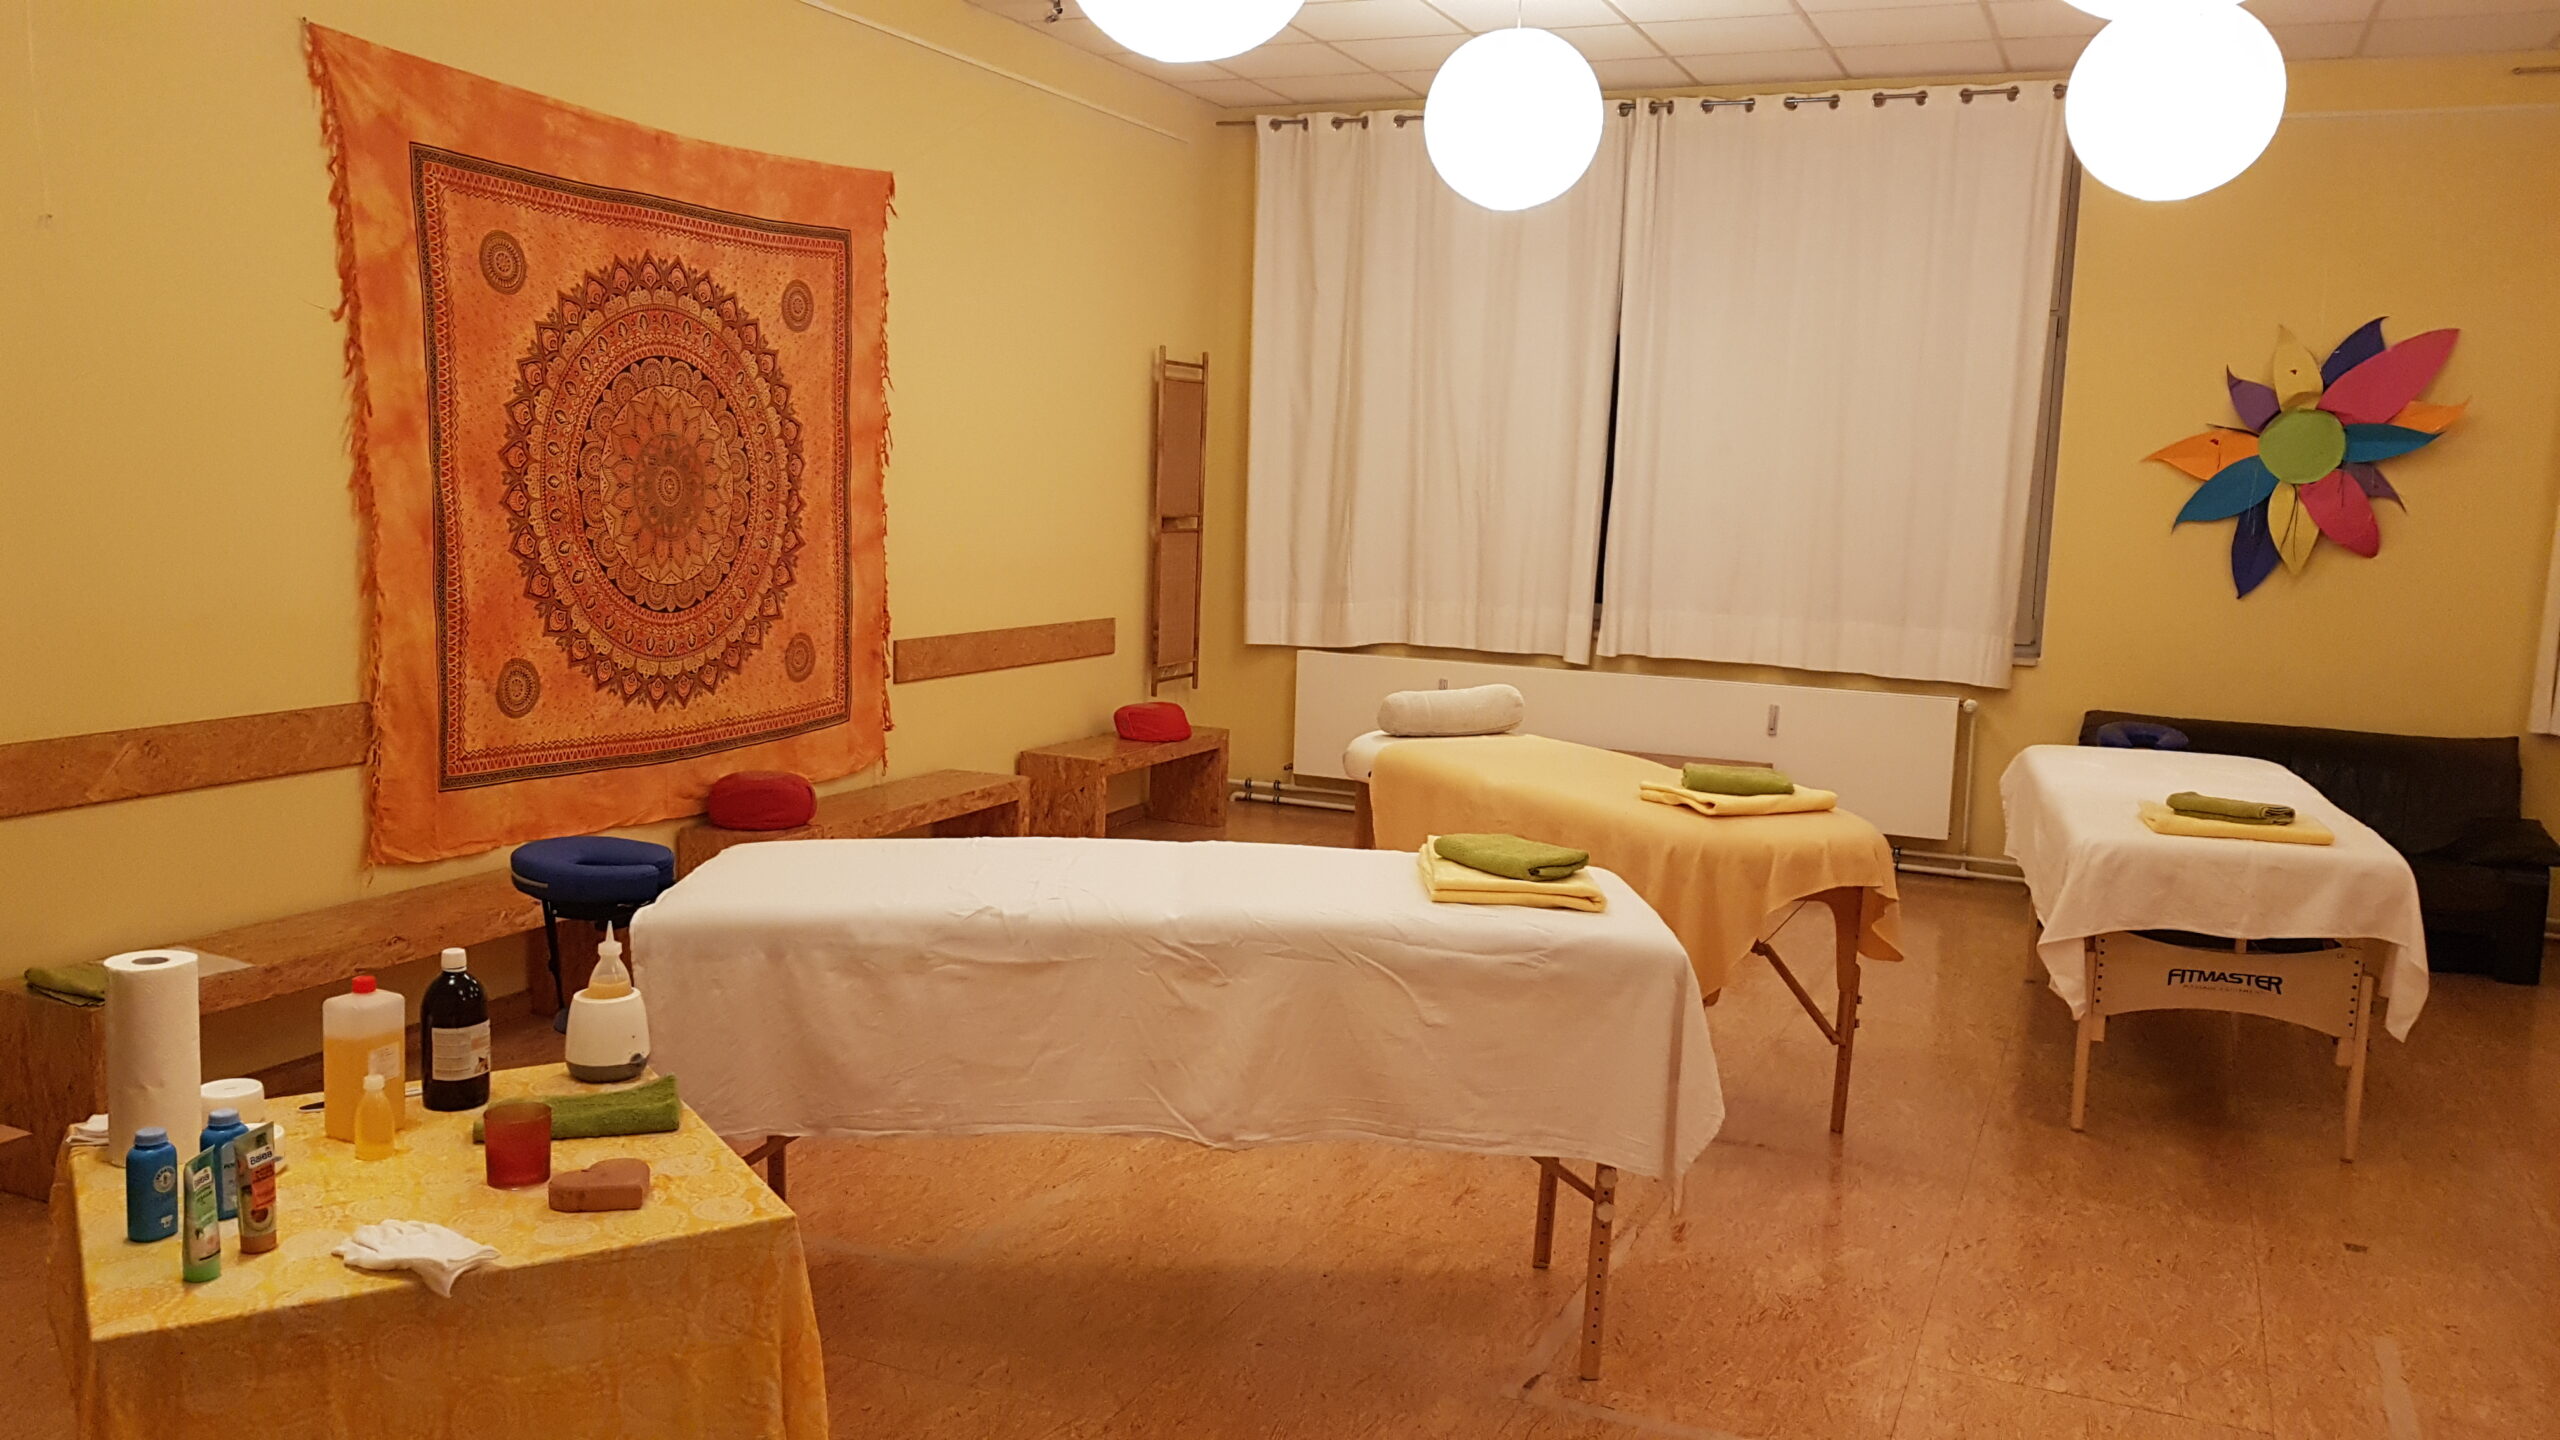 Lomi Lomi Massage Workshop in Rosenheim